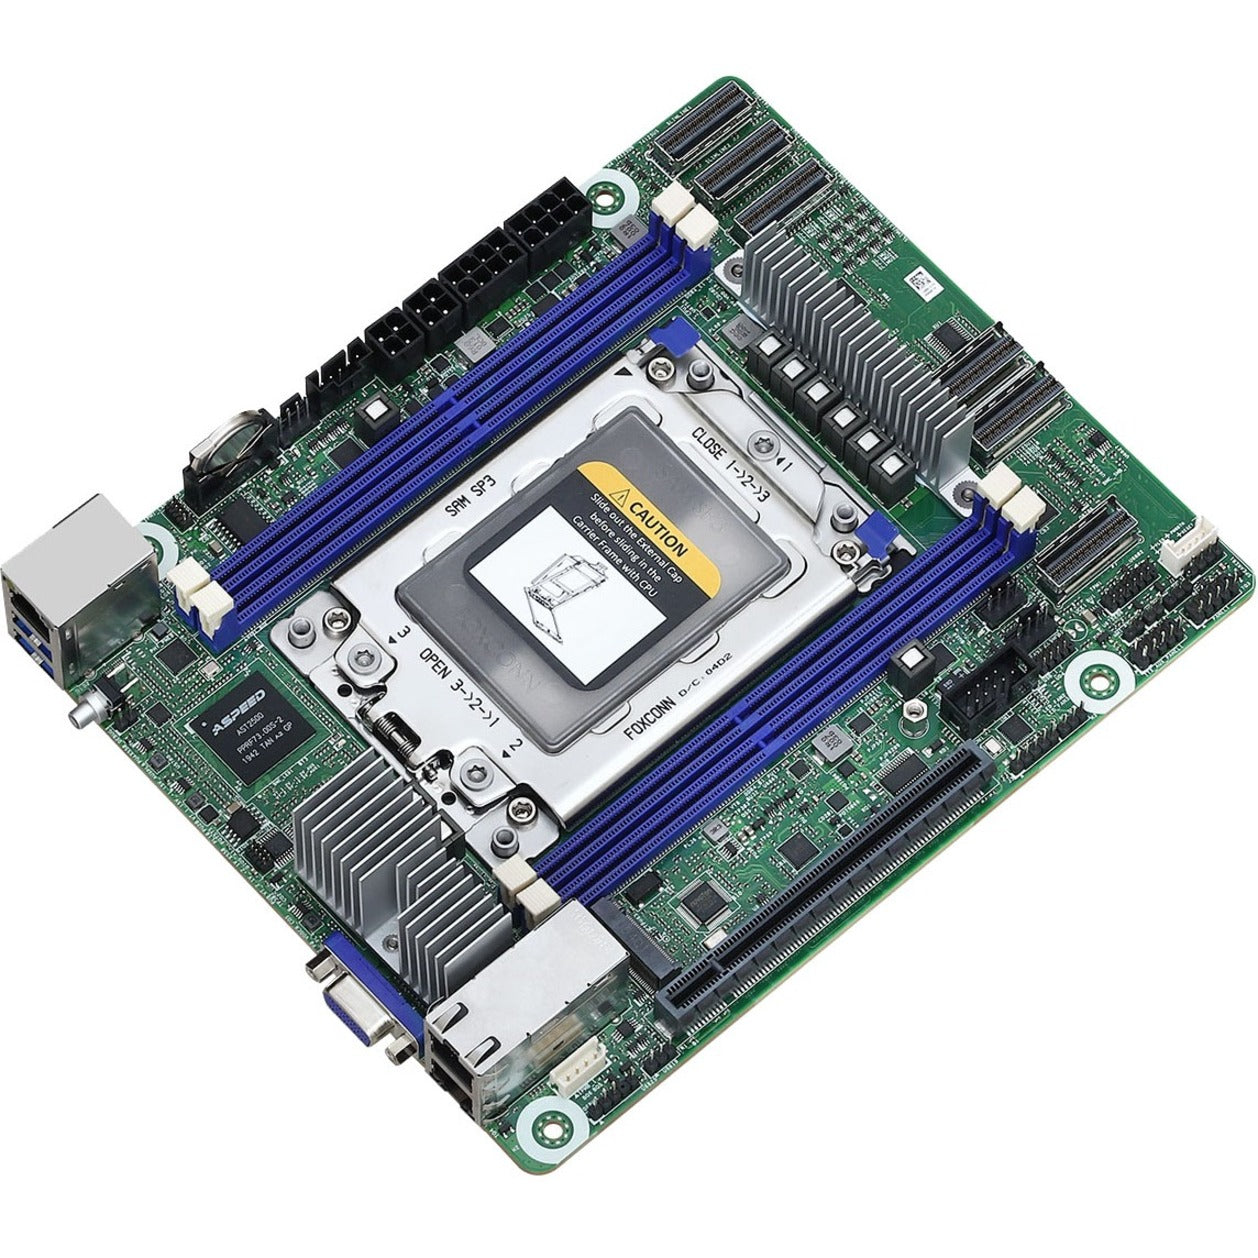 ASRock ROMED4ID-2T AMD EPYC 7002 SP3 LGA4094 DDR4 Deep mini-ITX Desktop Motherboard, AST2500 Graphics, 256GB Max Memory, 16 SATA Interfaces